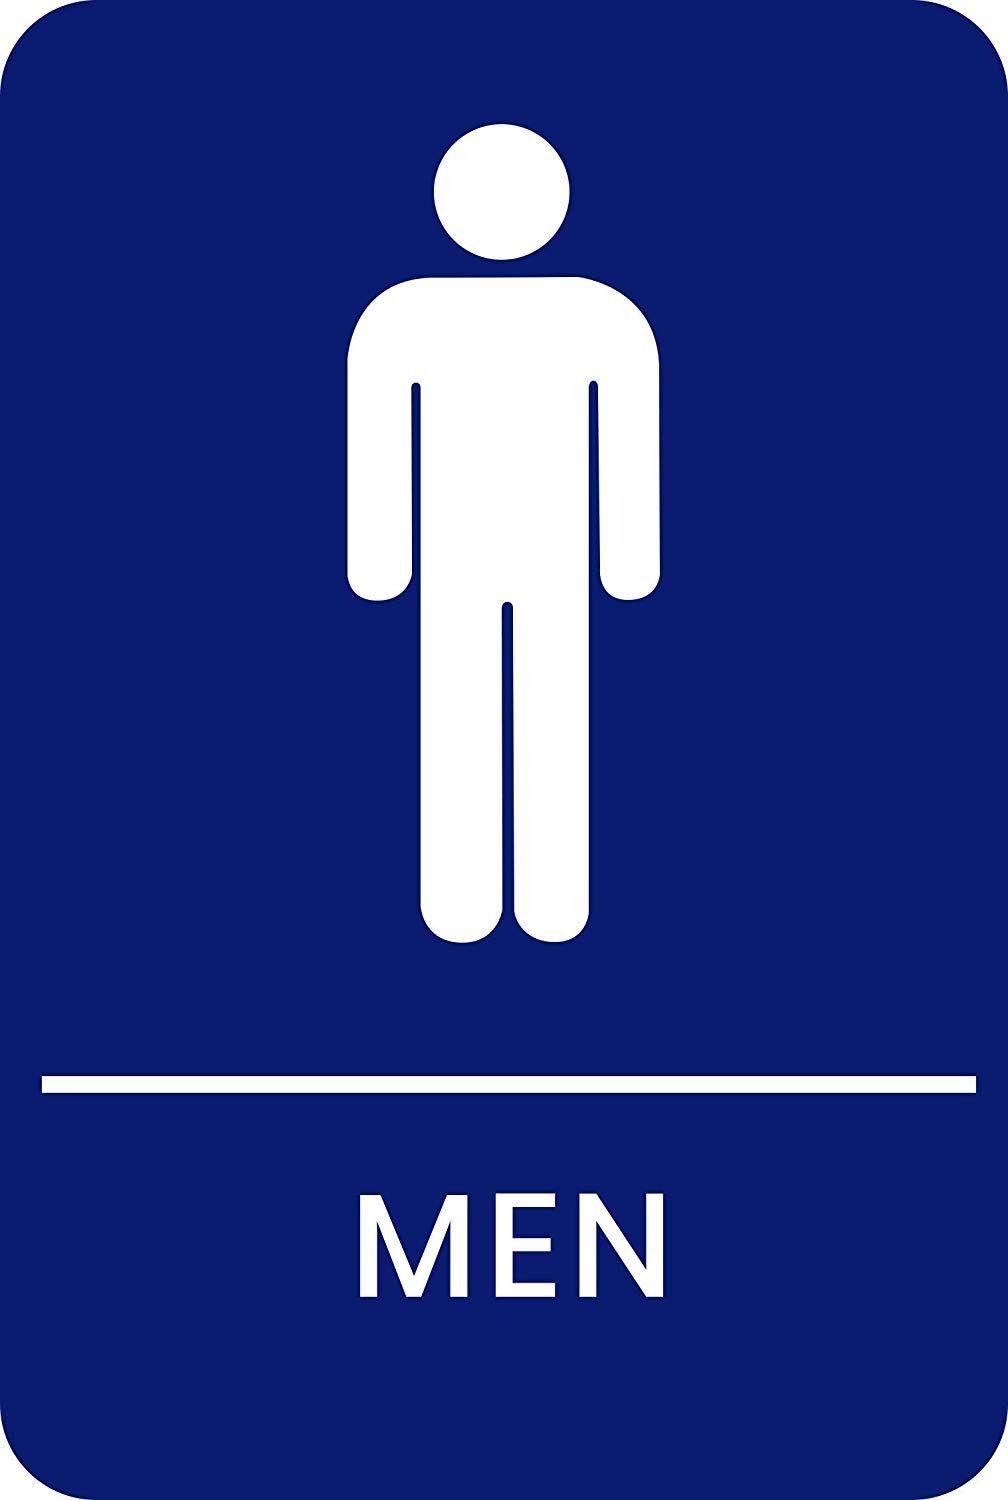 Bathroom Logo - Amazon.com : Men's Braille Restroom Sign Blue - Official Bathroom ...